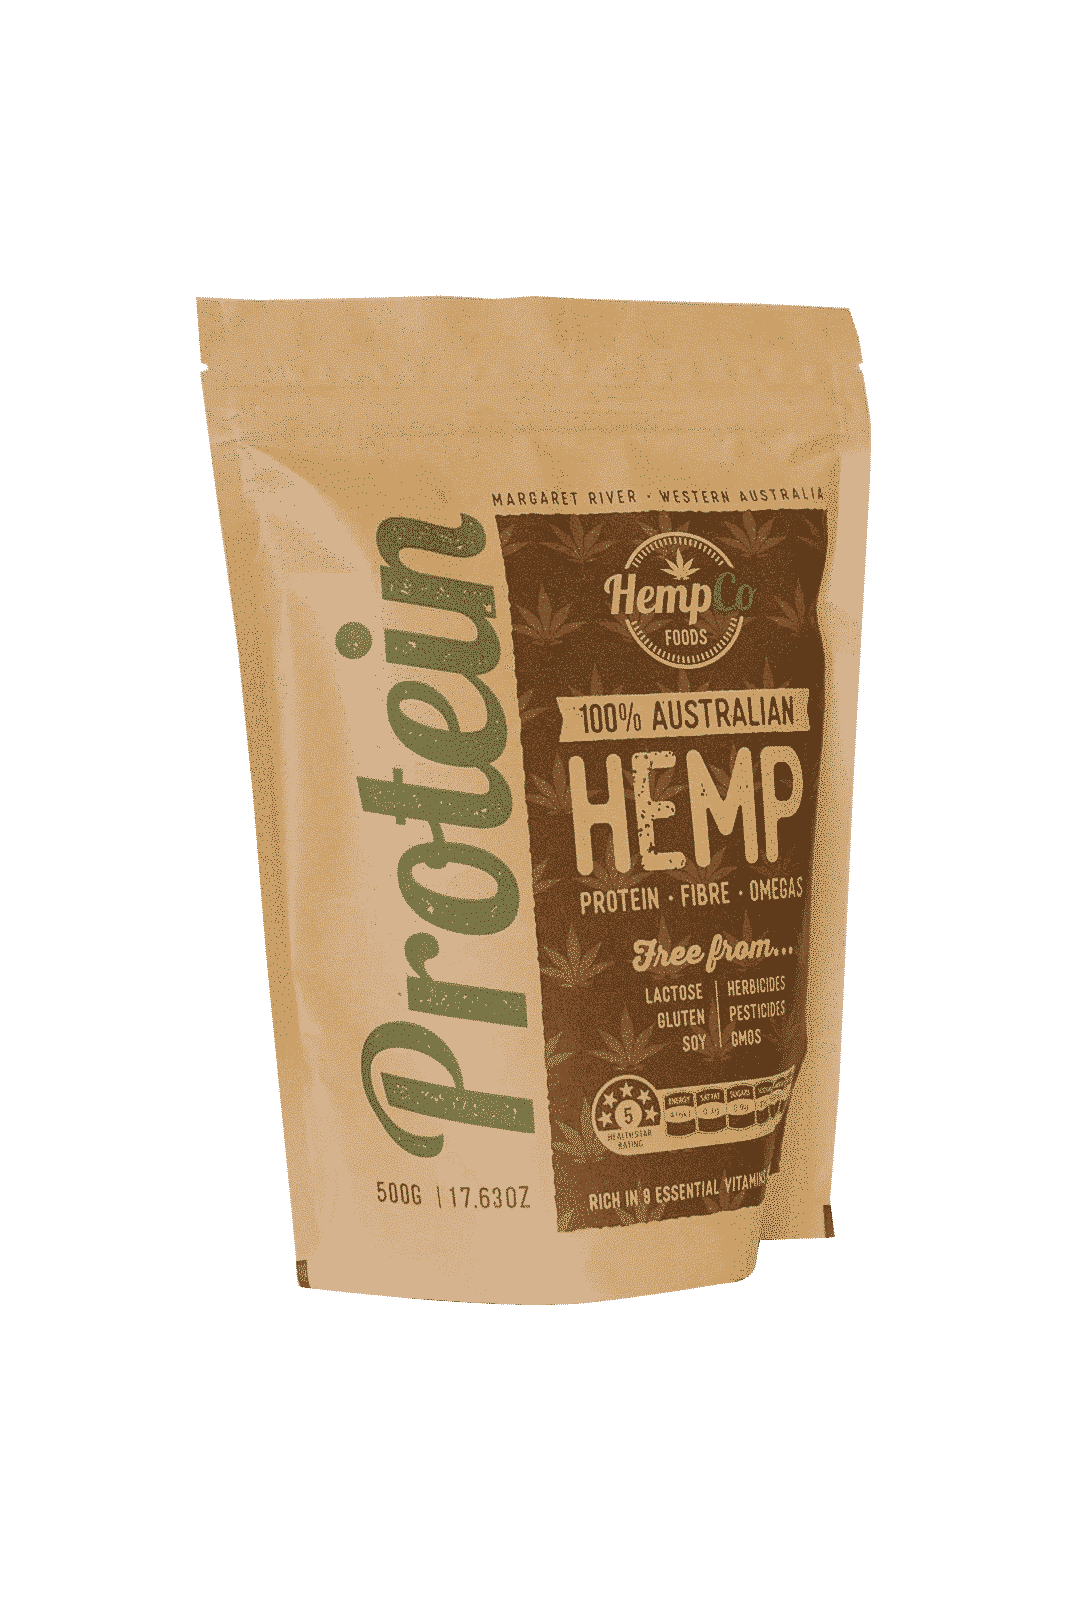 Hemp protein powder from 100% Australian grown hemp seeds